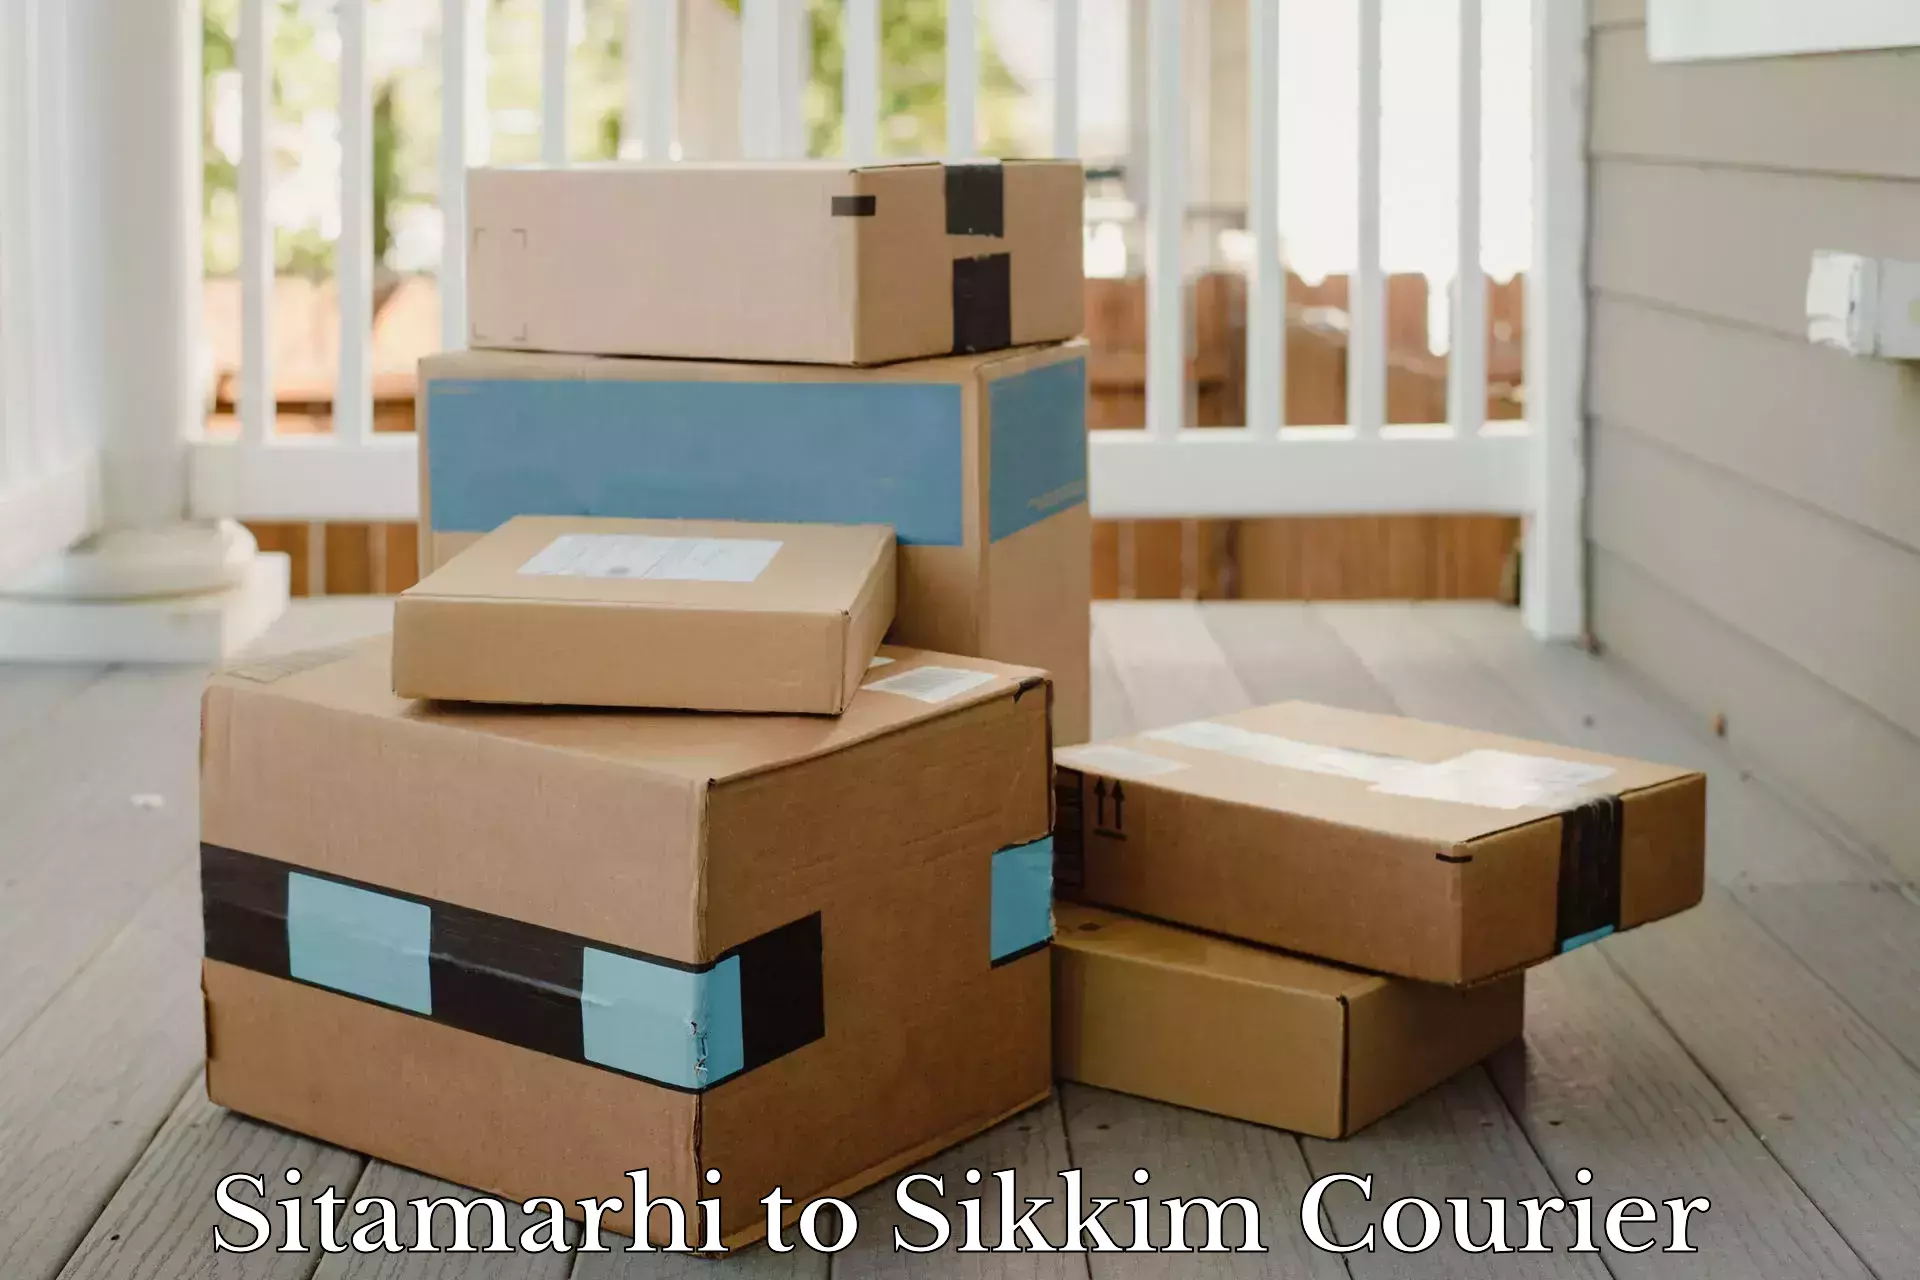 Efficient order fulfillment Sitamarhi to Gangtok